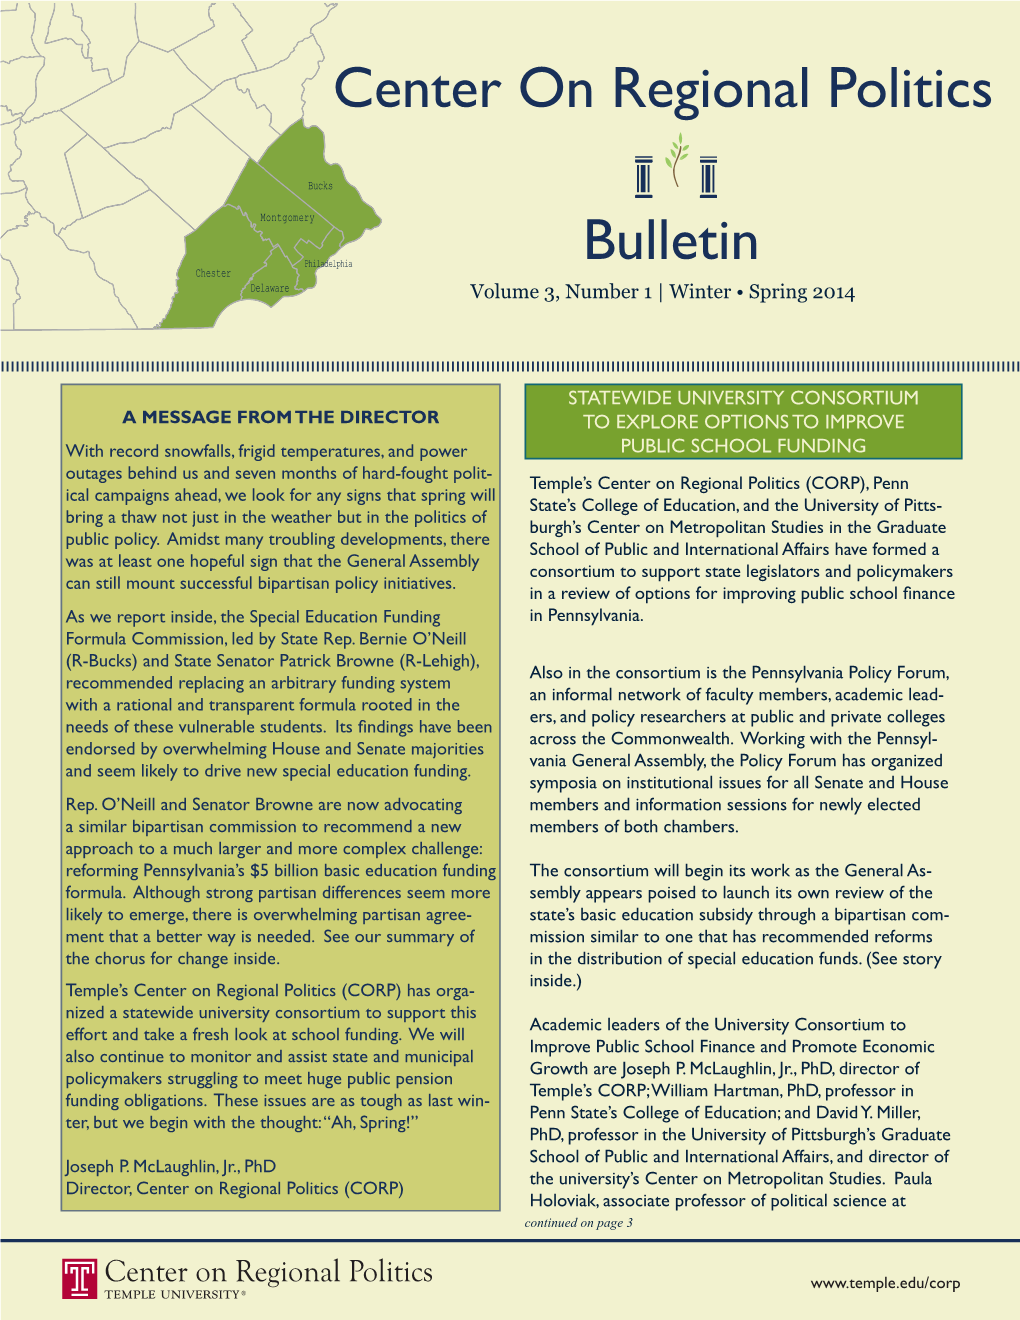 Center on Regional Politics Bulletin | Volume 3, Number 1| Winter • Spring 2014